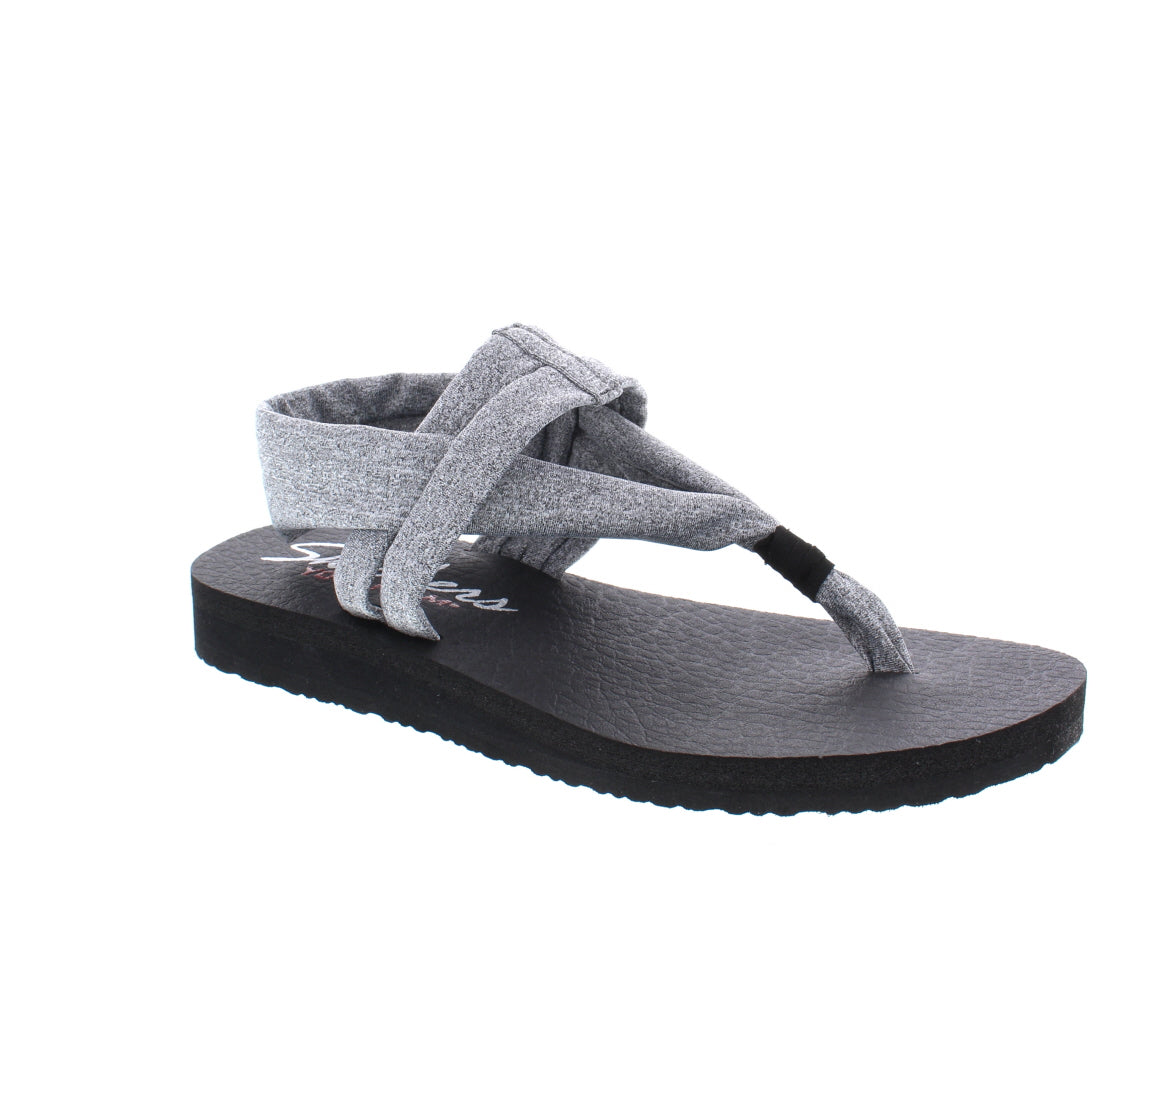 Skechers Yoga Foam Sandals  Foam sandals, Shop sandals, Sandals